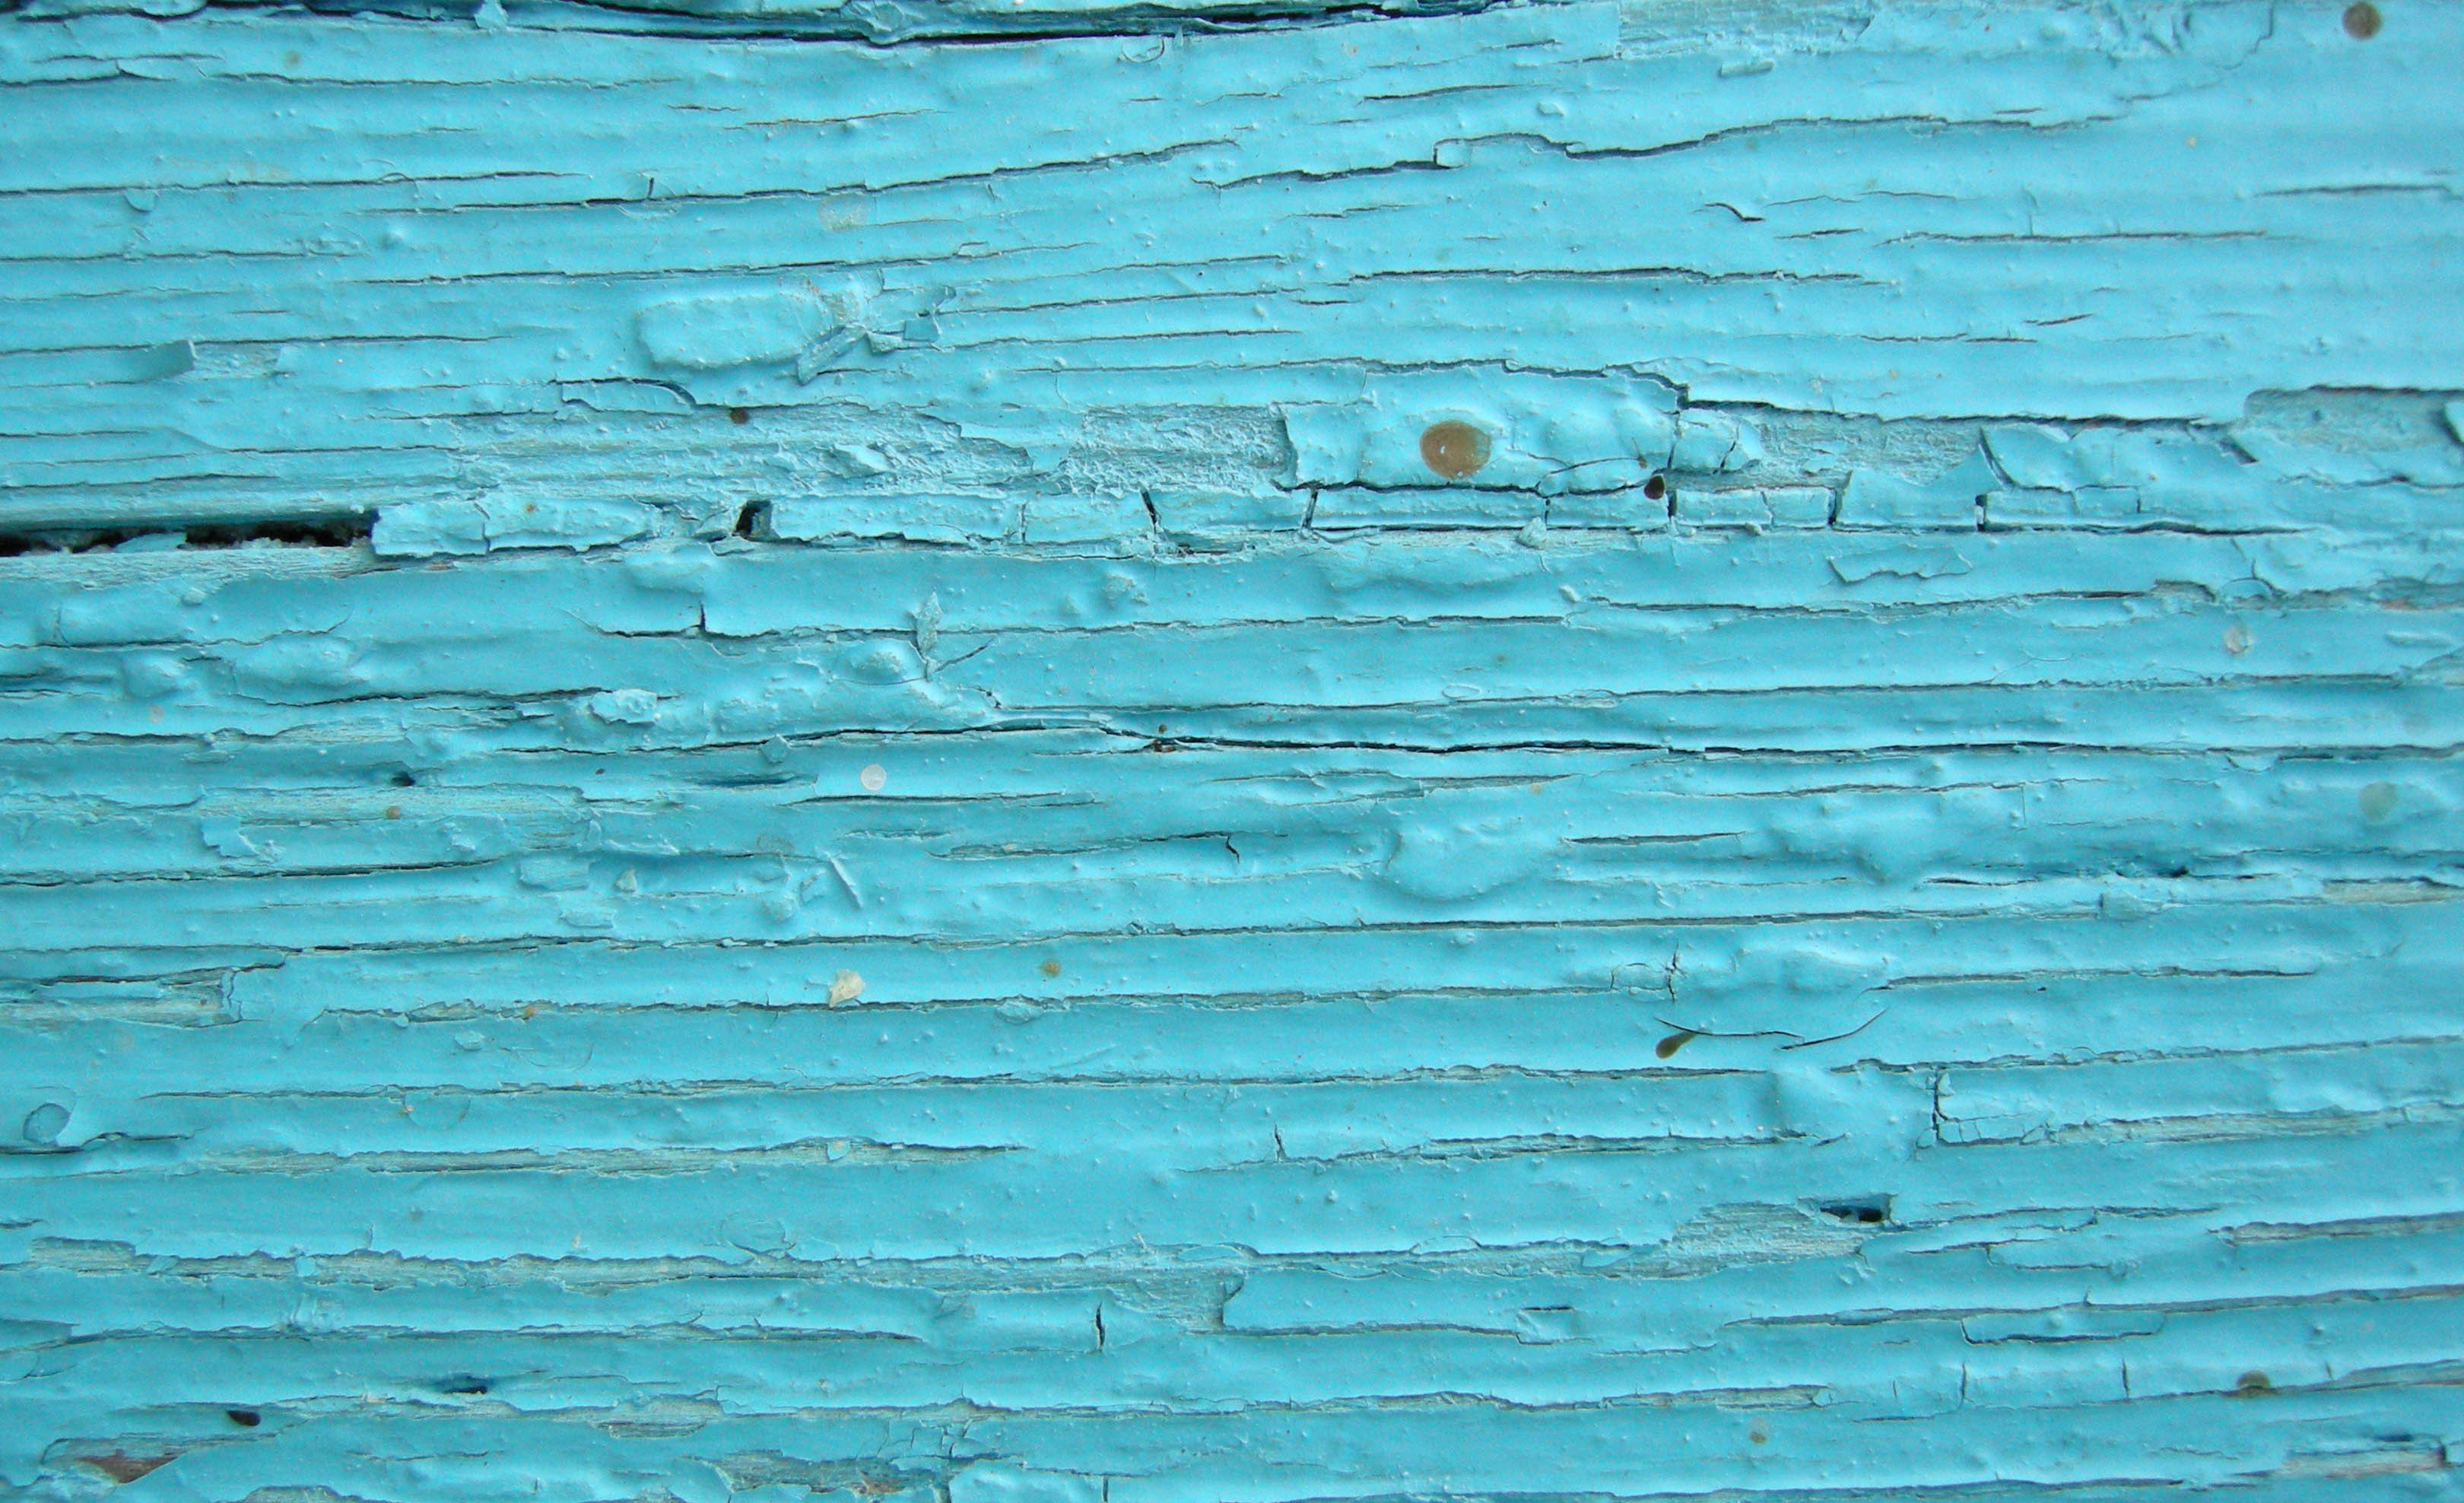 Wood plank with shriveled light blue paint